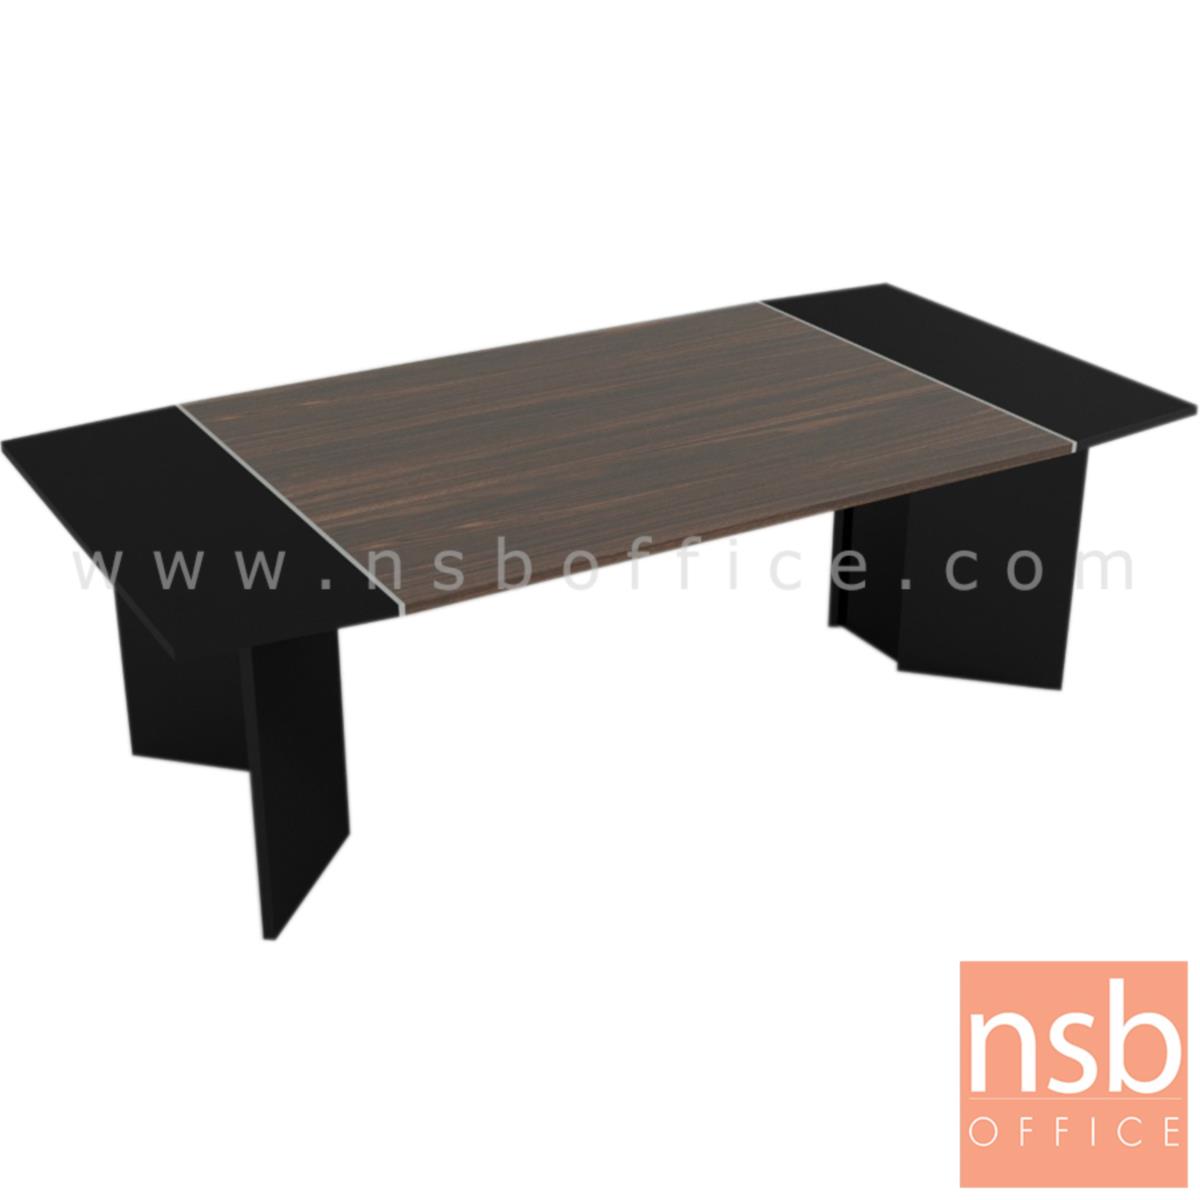 A05A204:โต๊ะประชุมทรงสี่เหลี่ยมคางหมู BAVARIA (บาวาเรีย)  240W cm. สีมอคค่าวอลนัท-ดำ